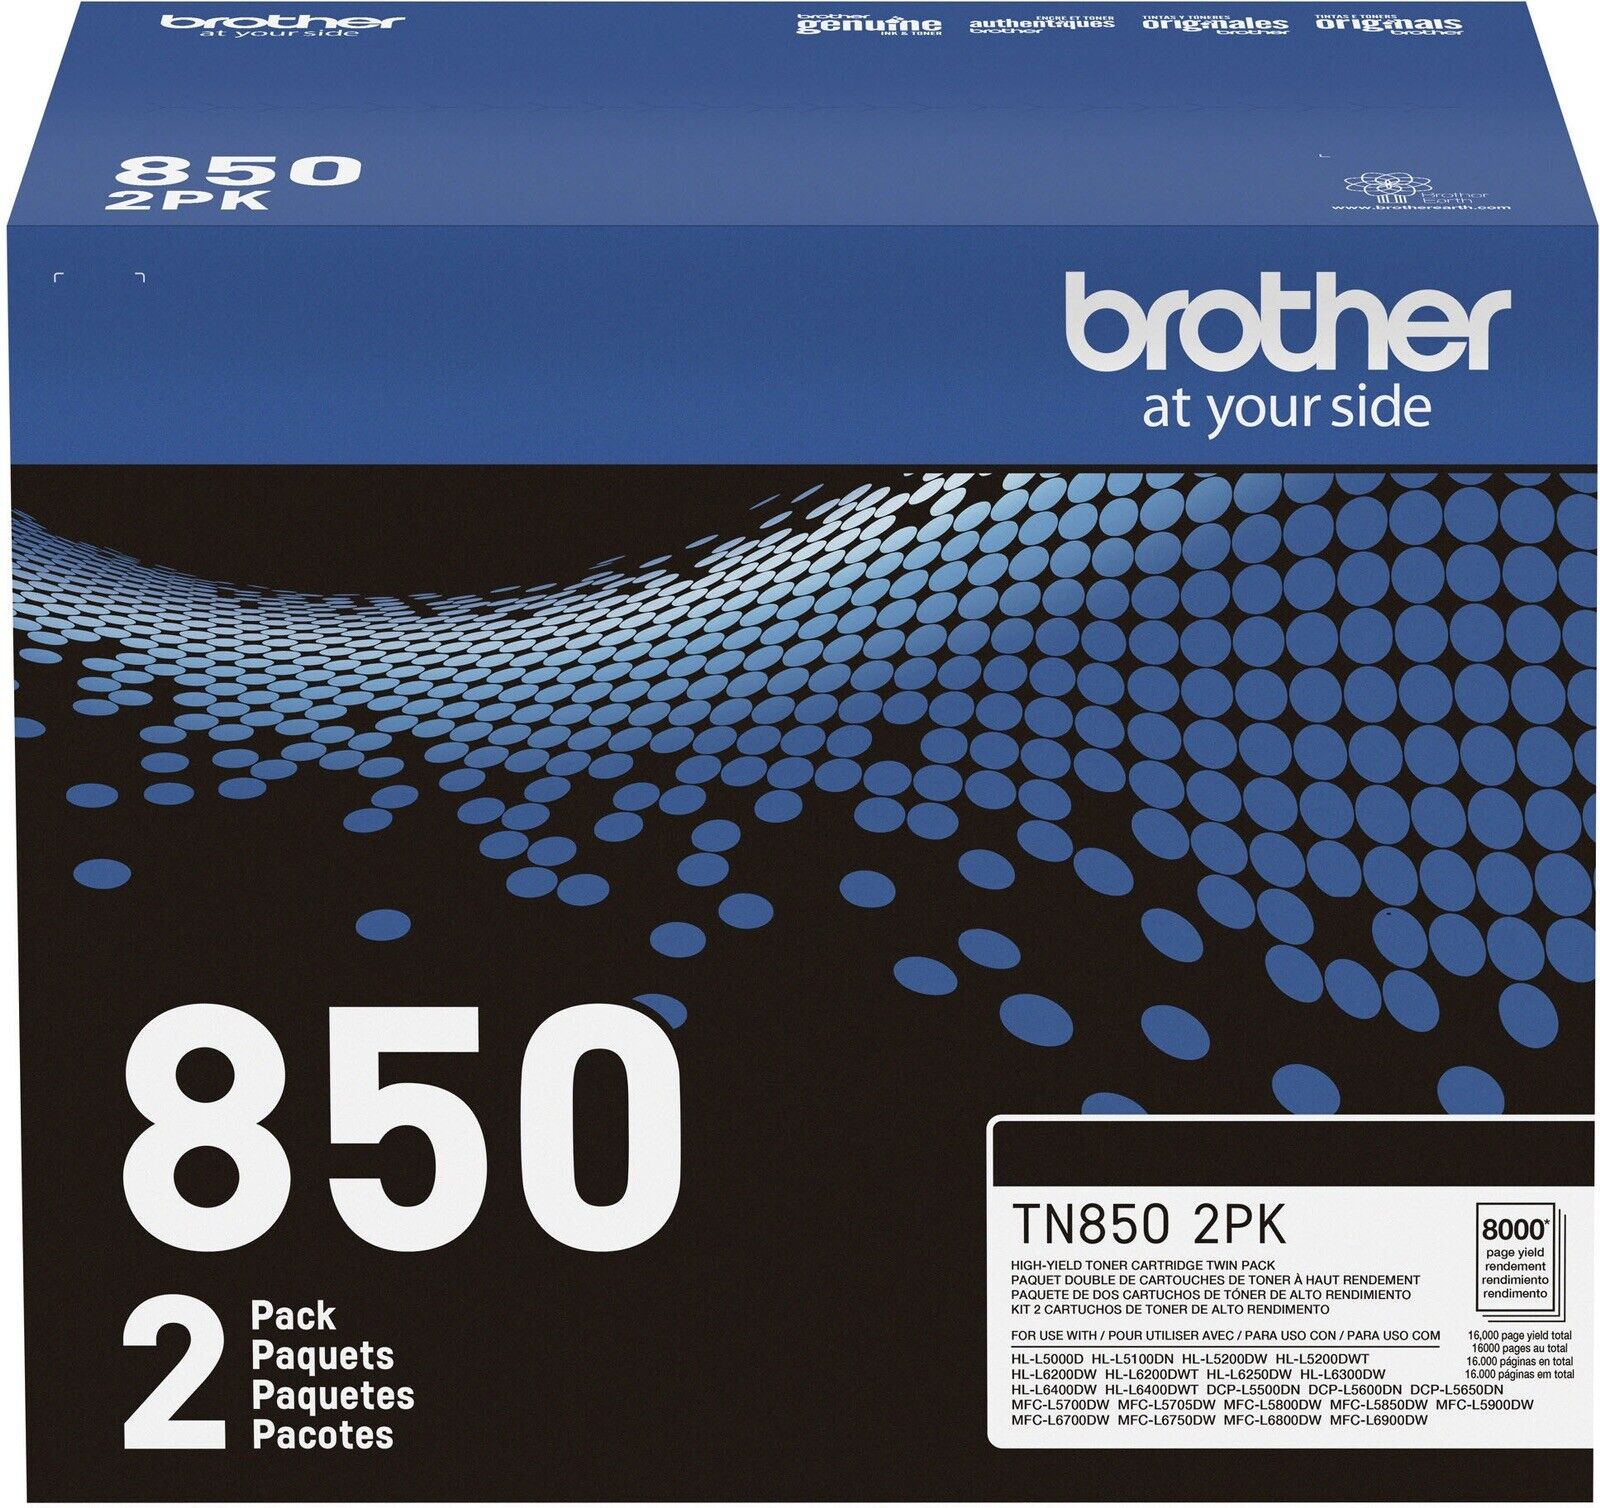 🔥 BRAND NEW 🔥(sealed) Brother TN850 2PK High-Yield Black Toner Cartridge